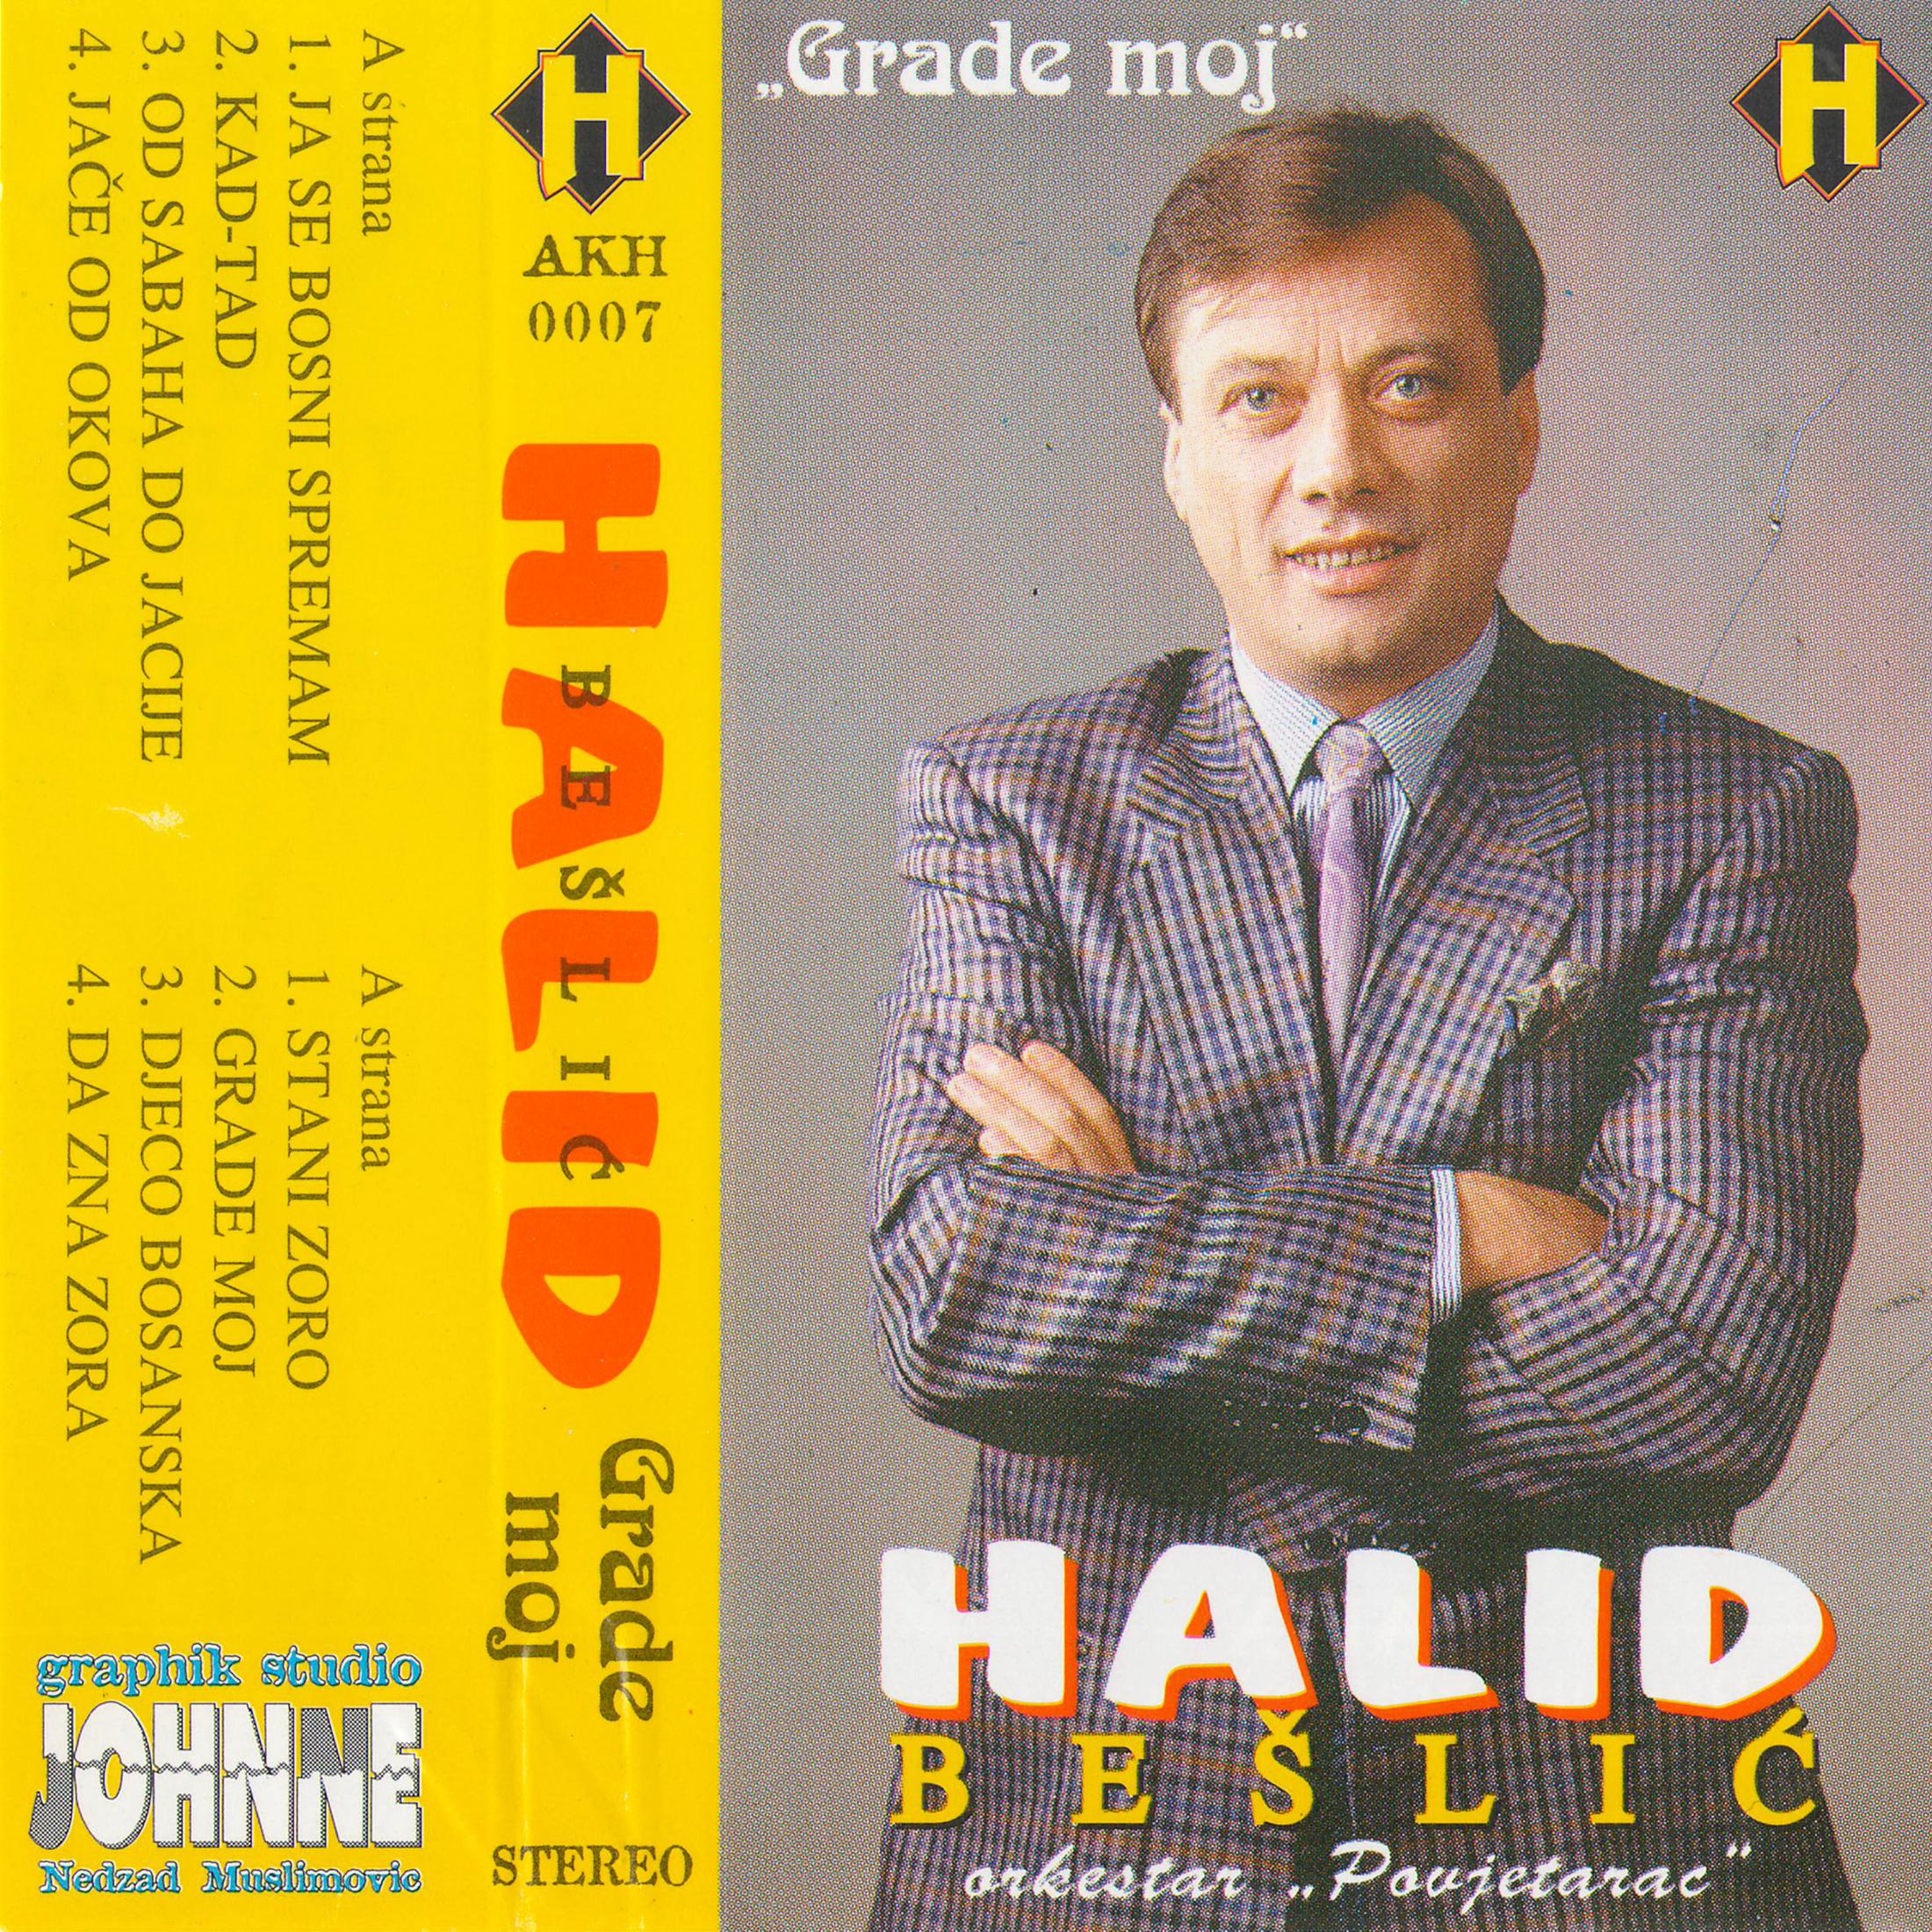 Grade moj (Bosnian music)